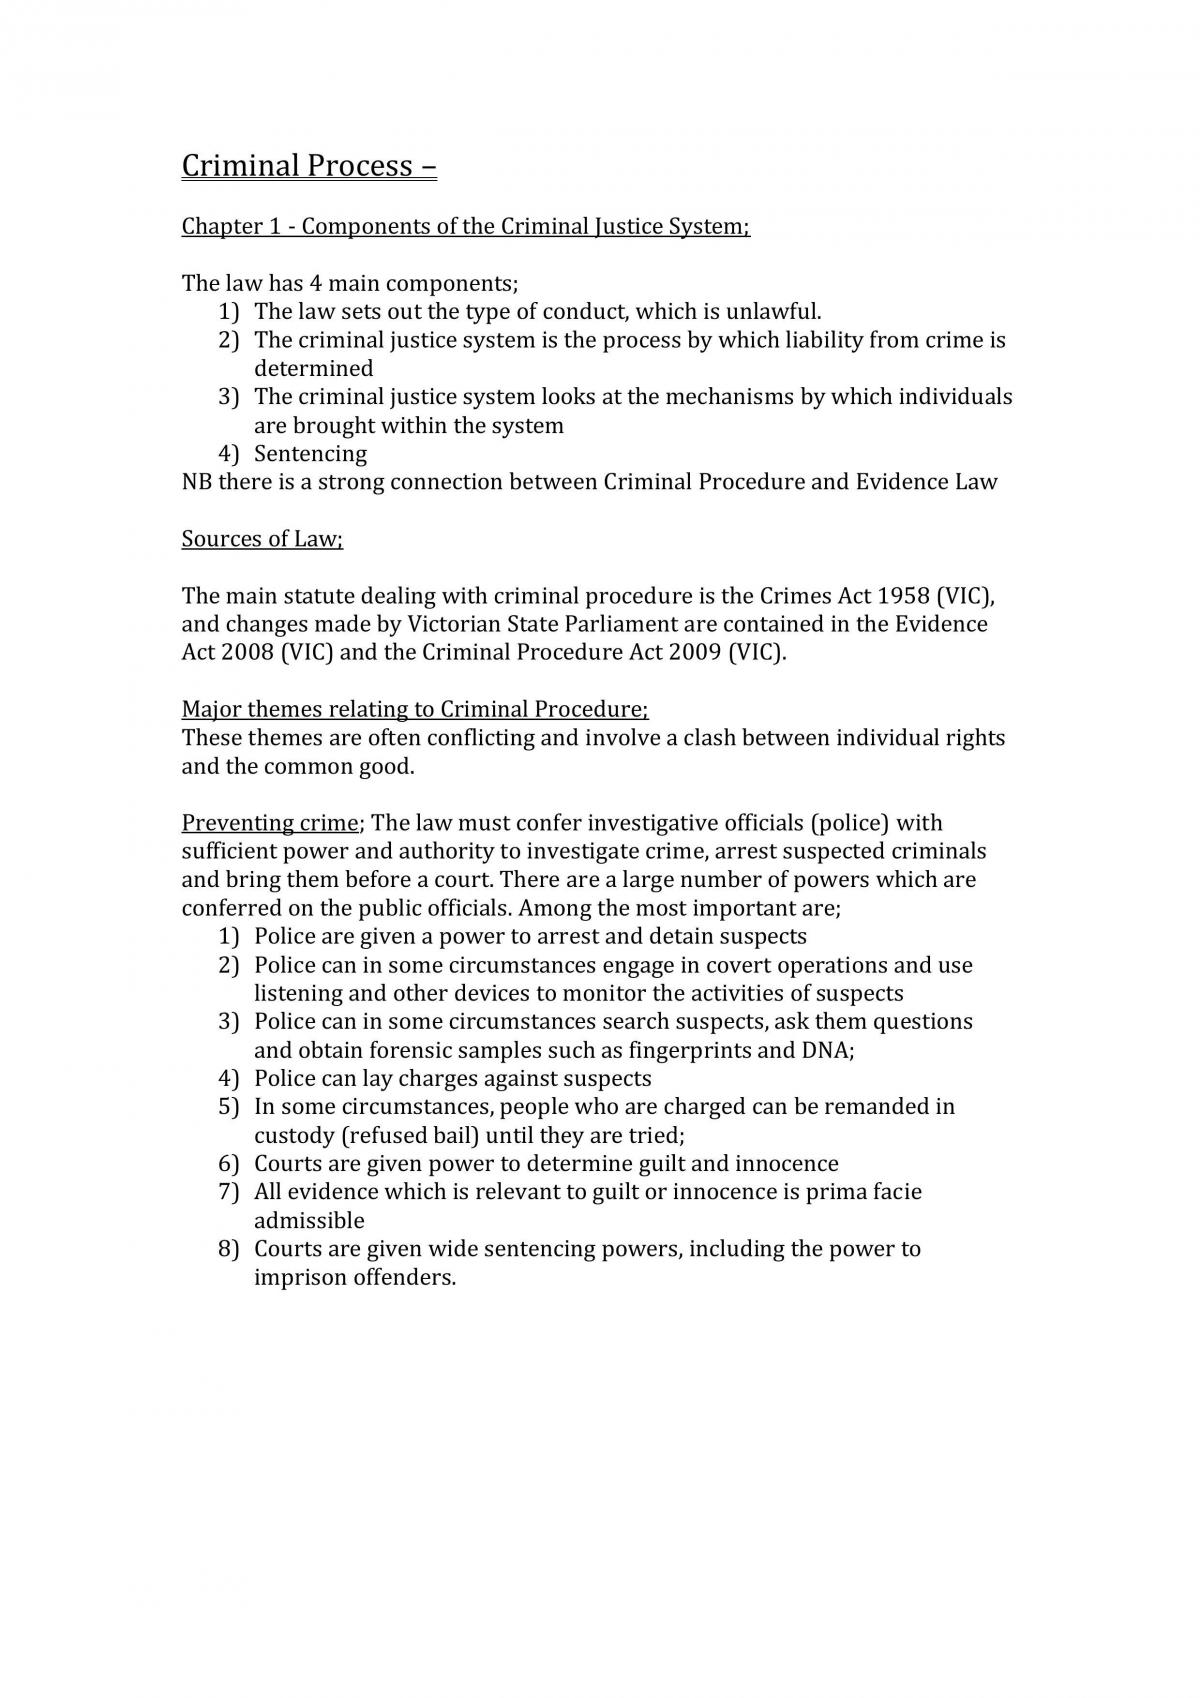 Criminal Process Study Notes - Page 1